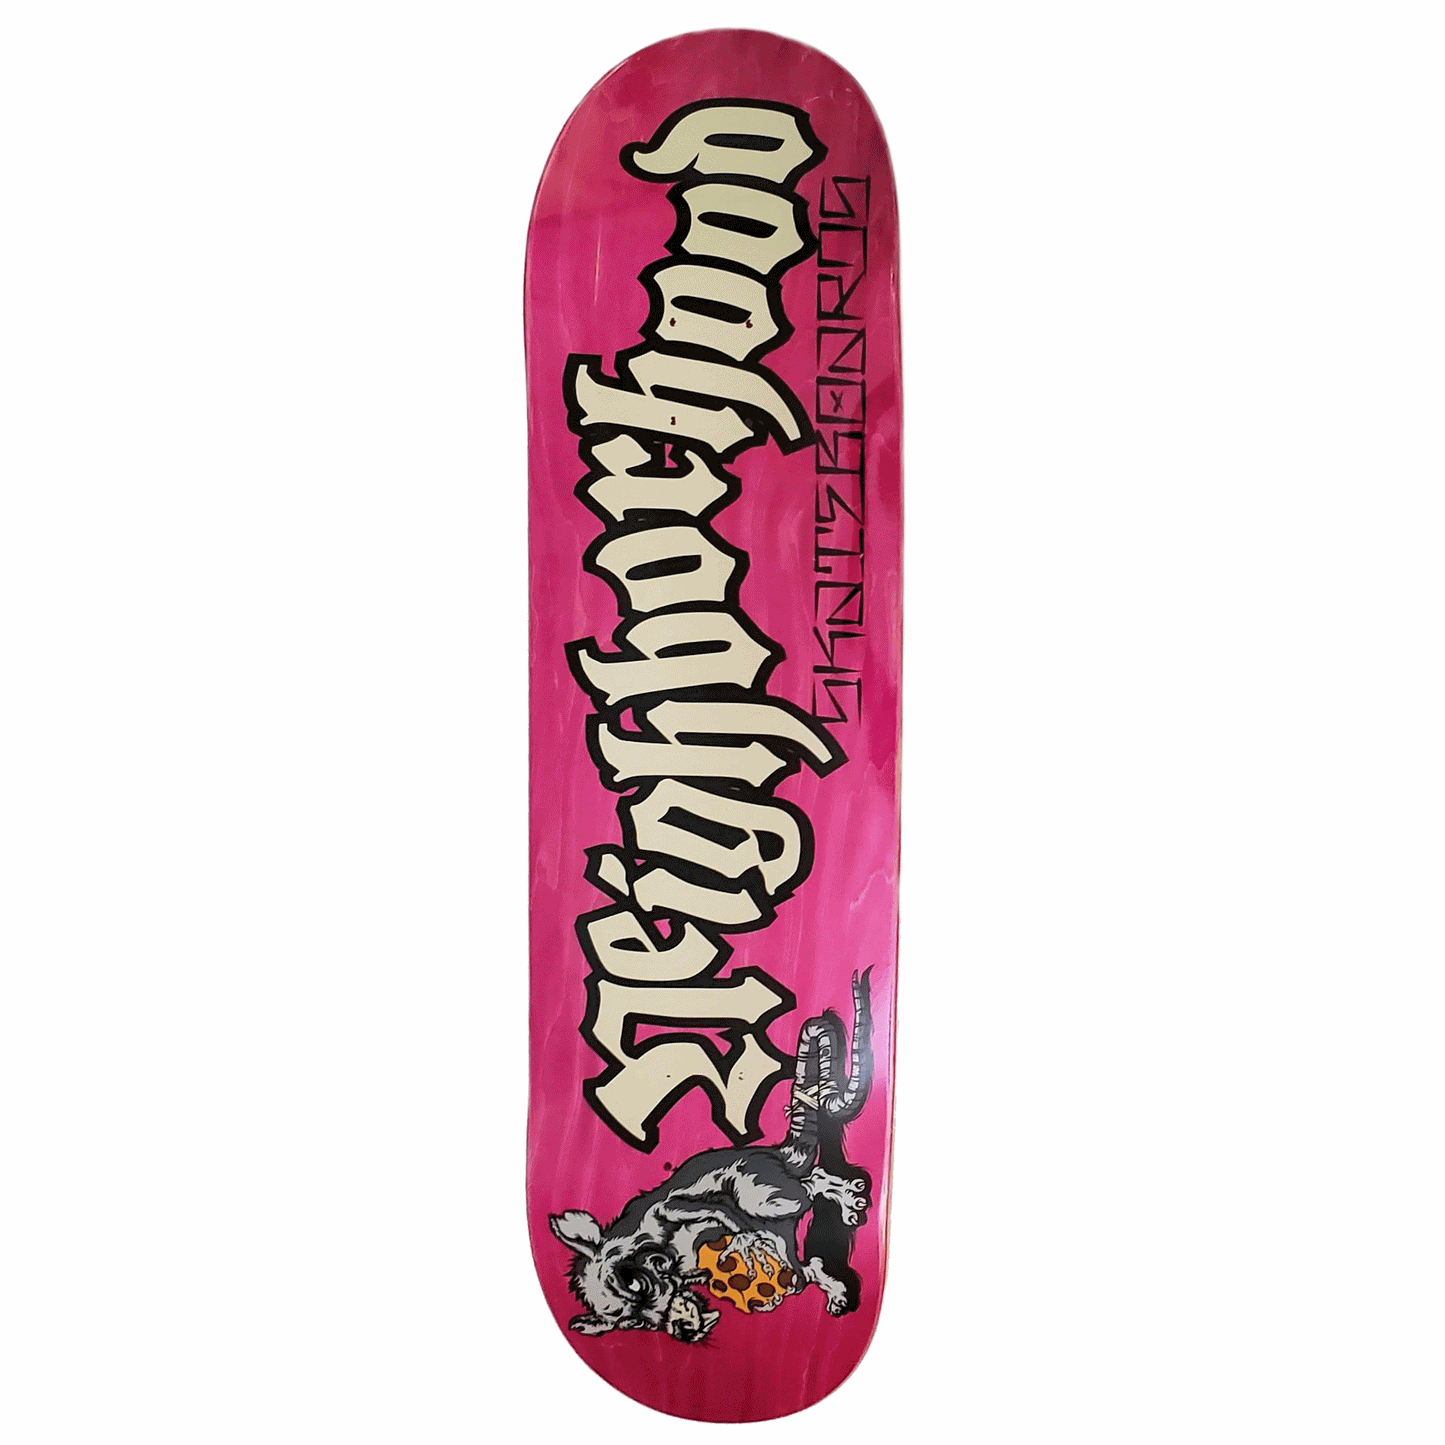 Neighborhood - "Pizza Rat" - Skateboard Deck - 8.25"